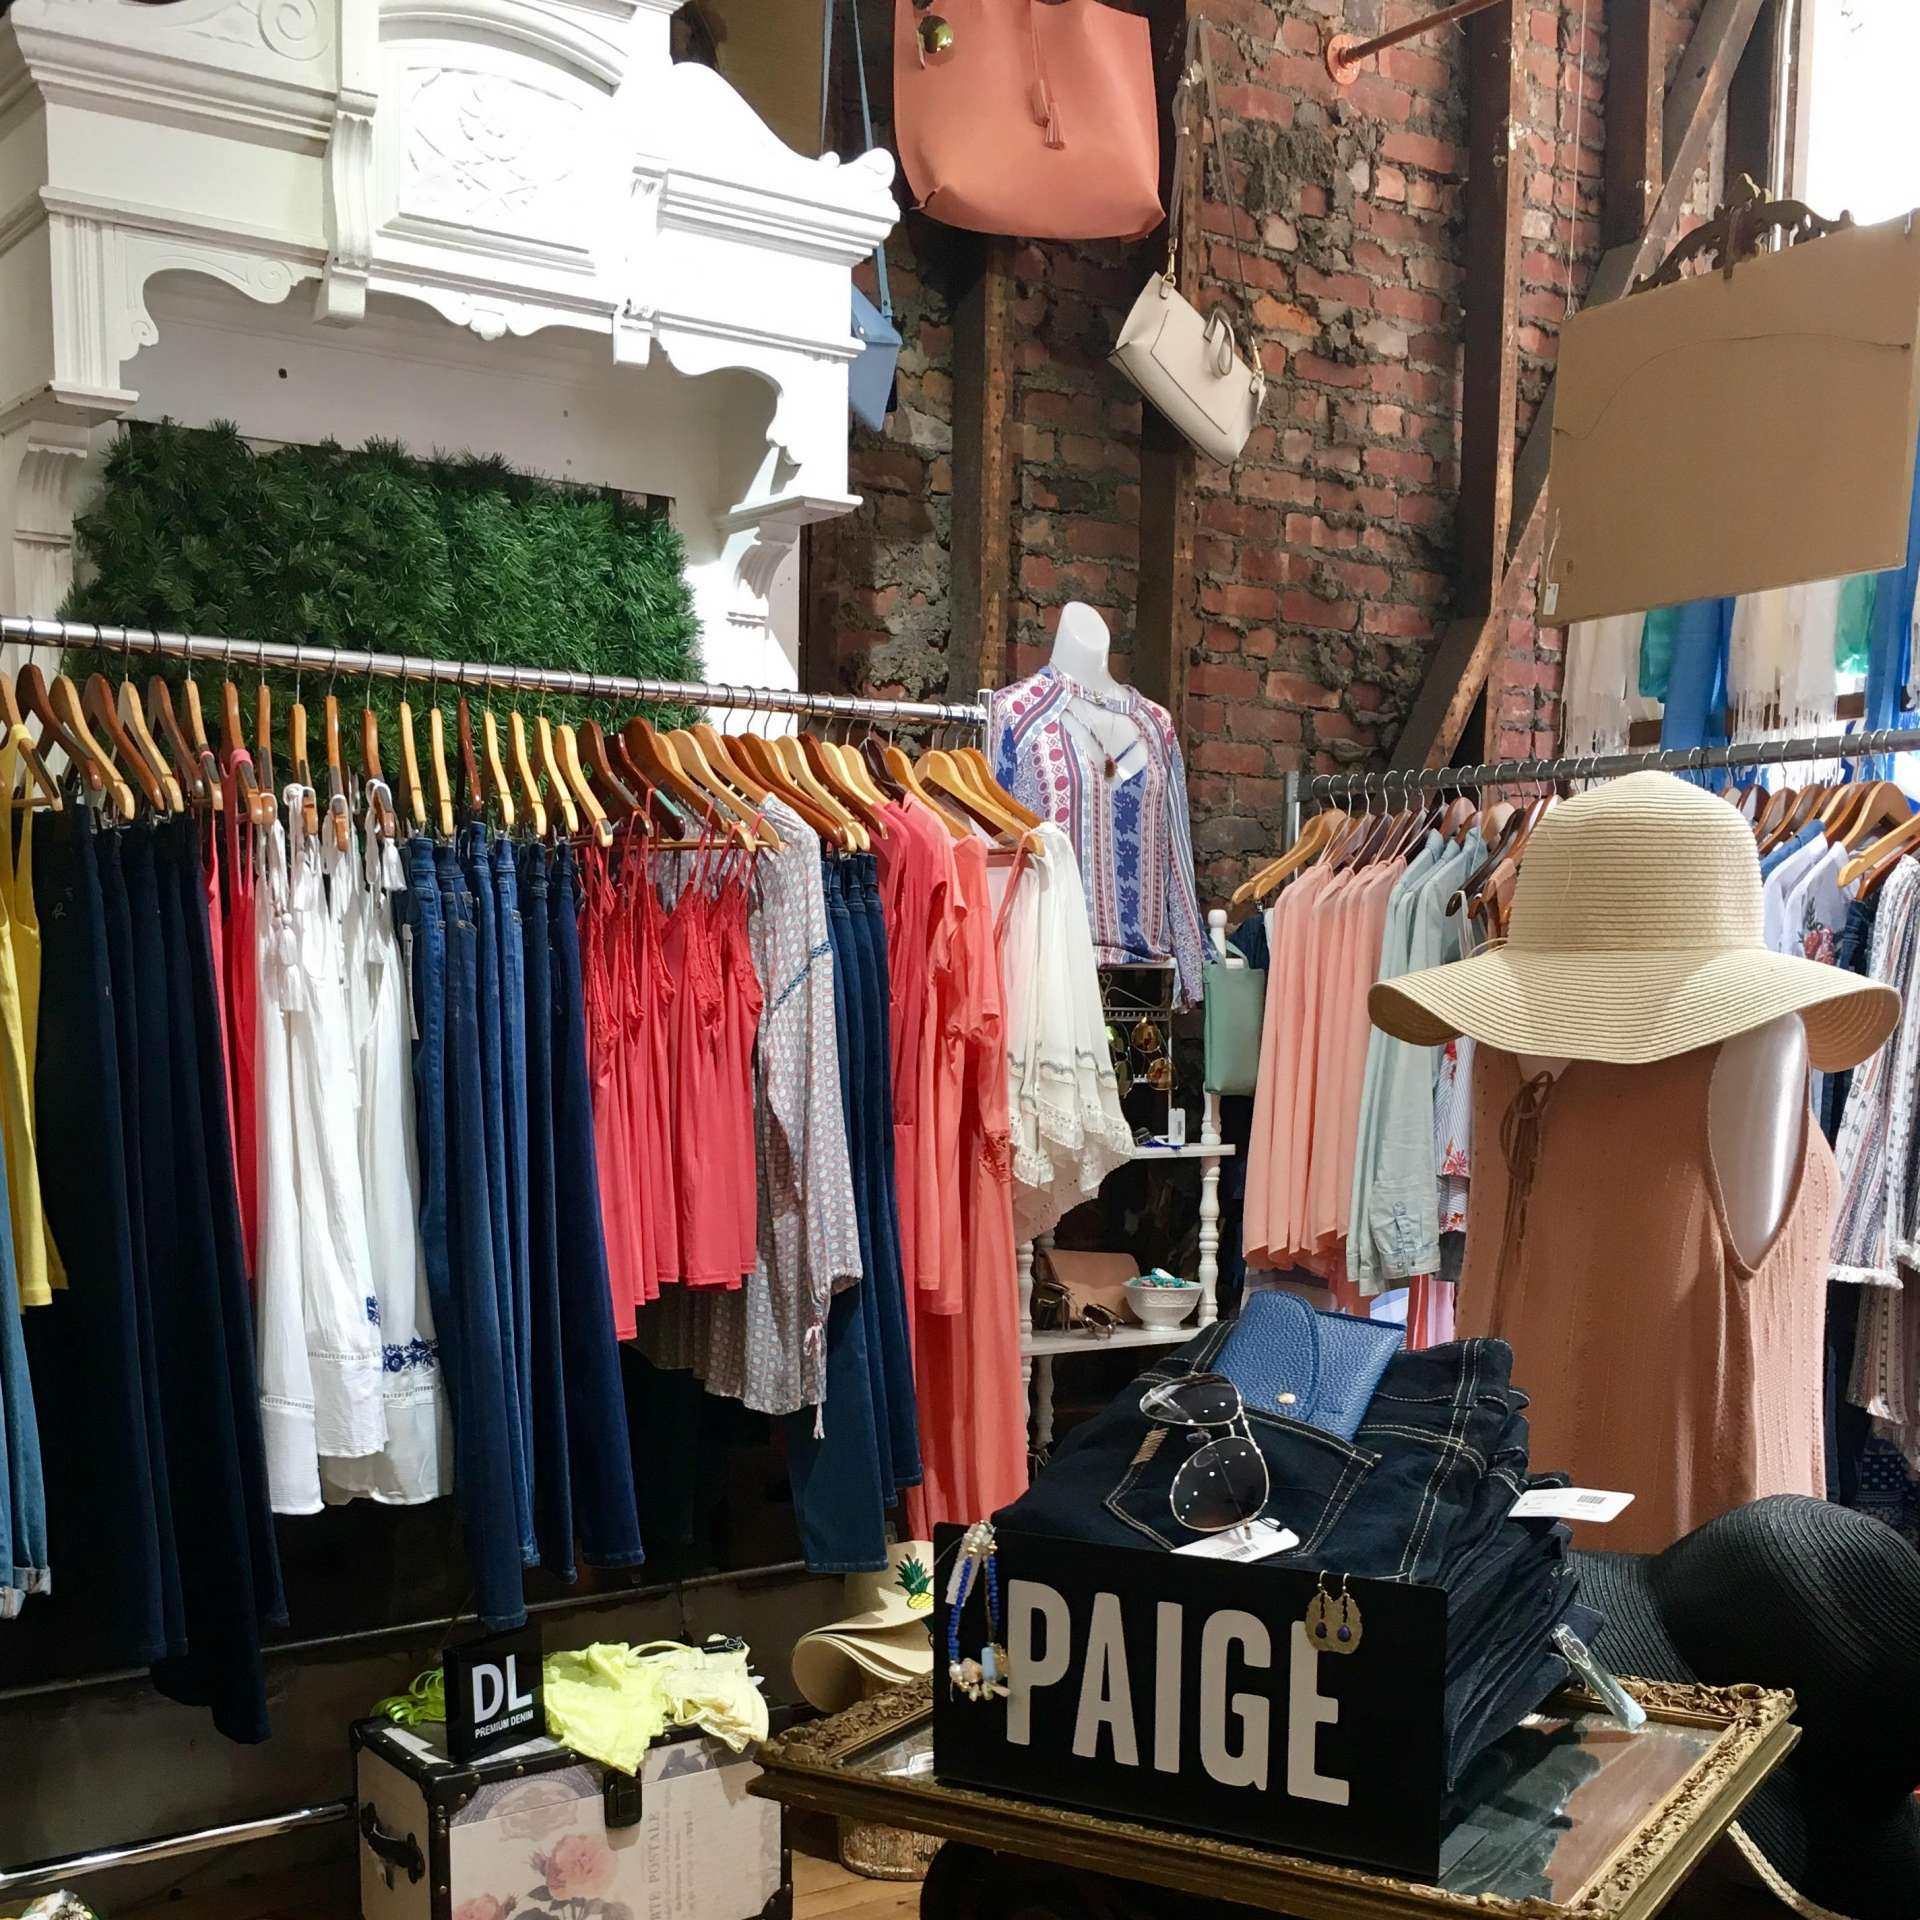 tias-jersey-city-boutique-inside-rack-hangers-paige-shopping-local